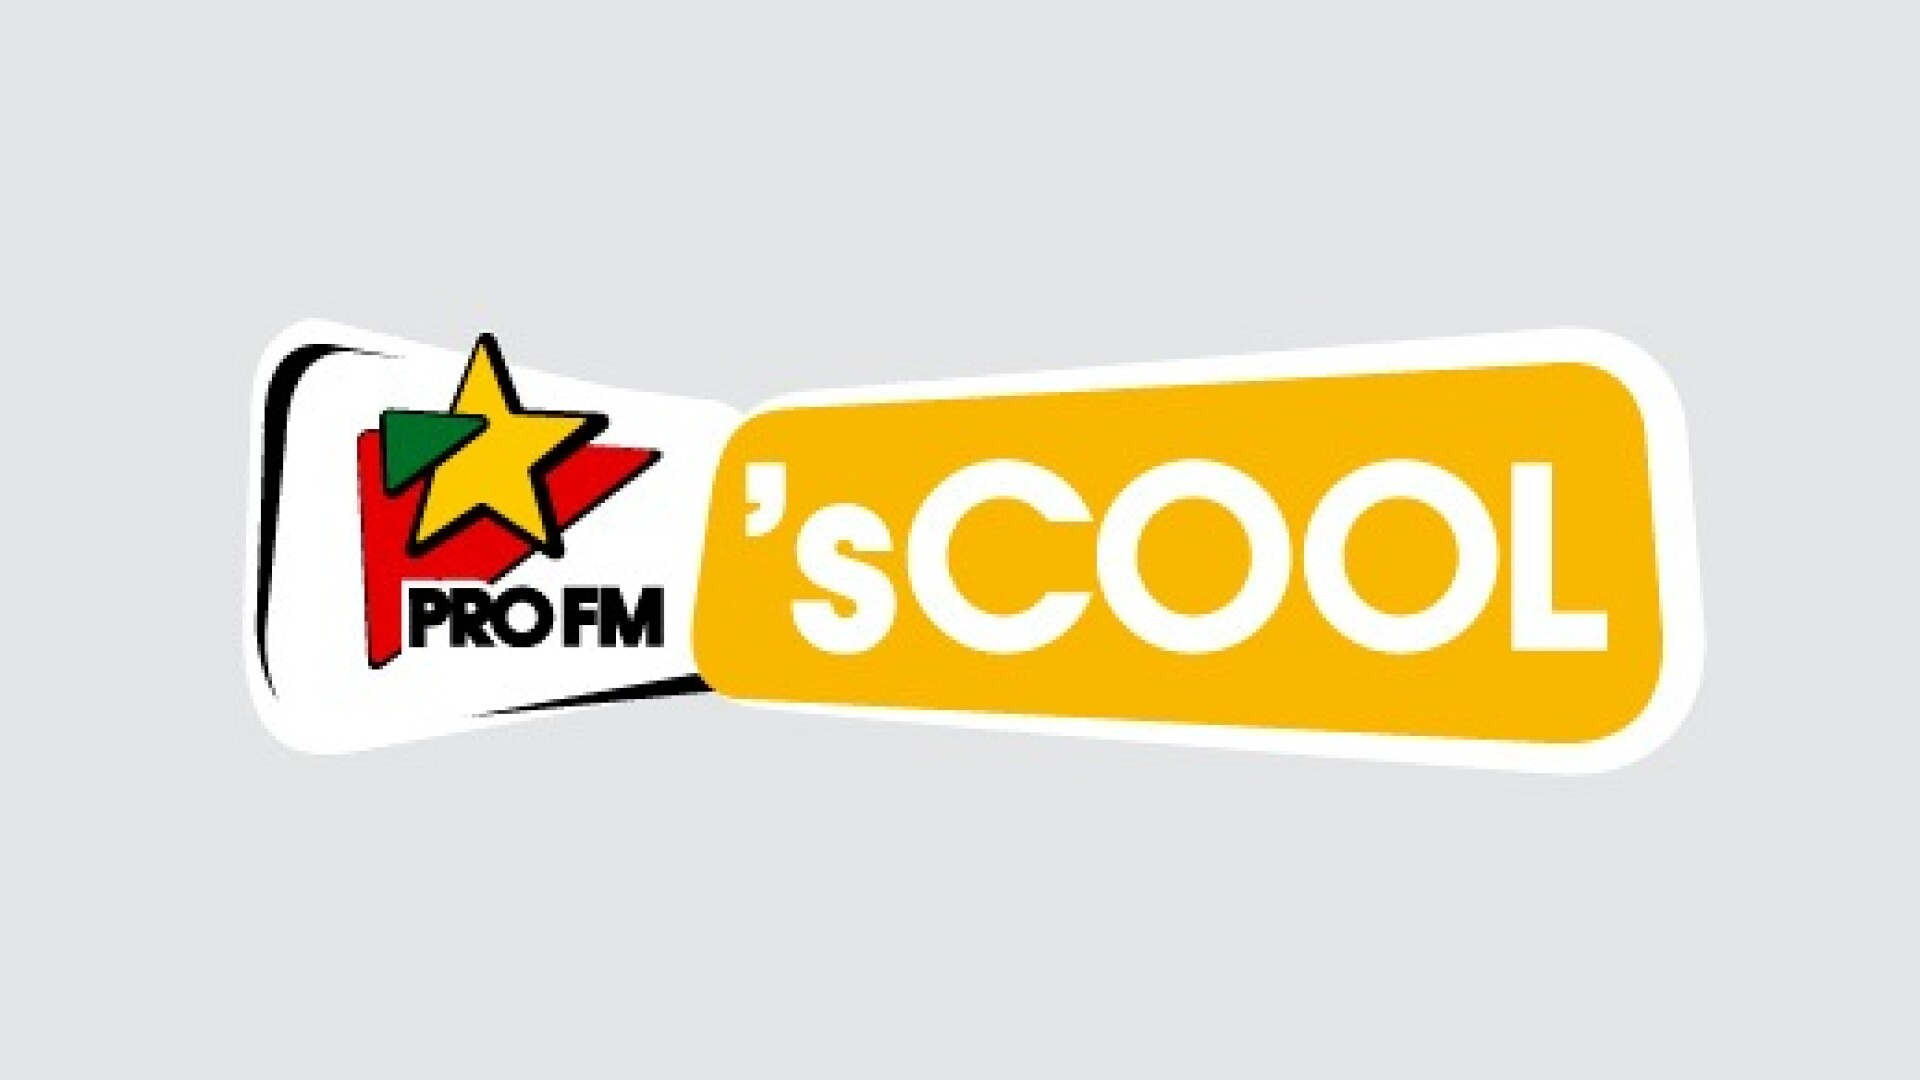 ProFM’sCOOL